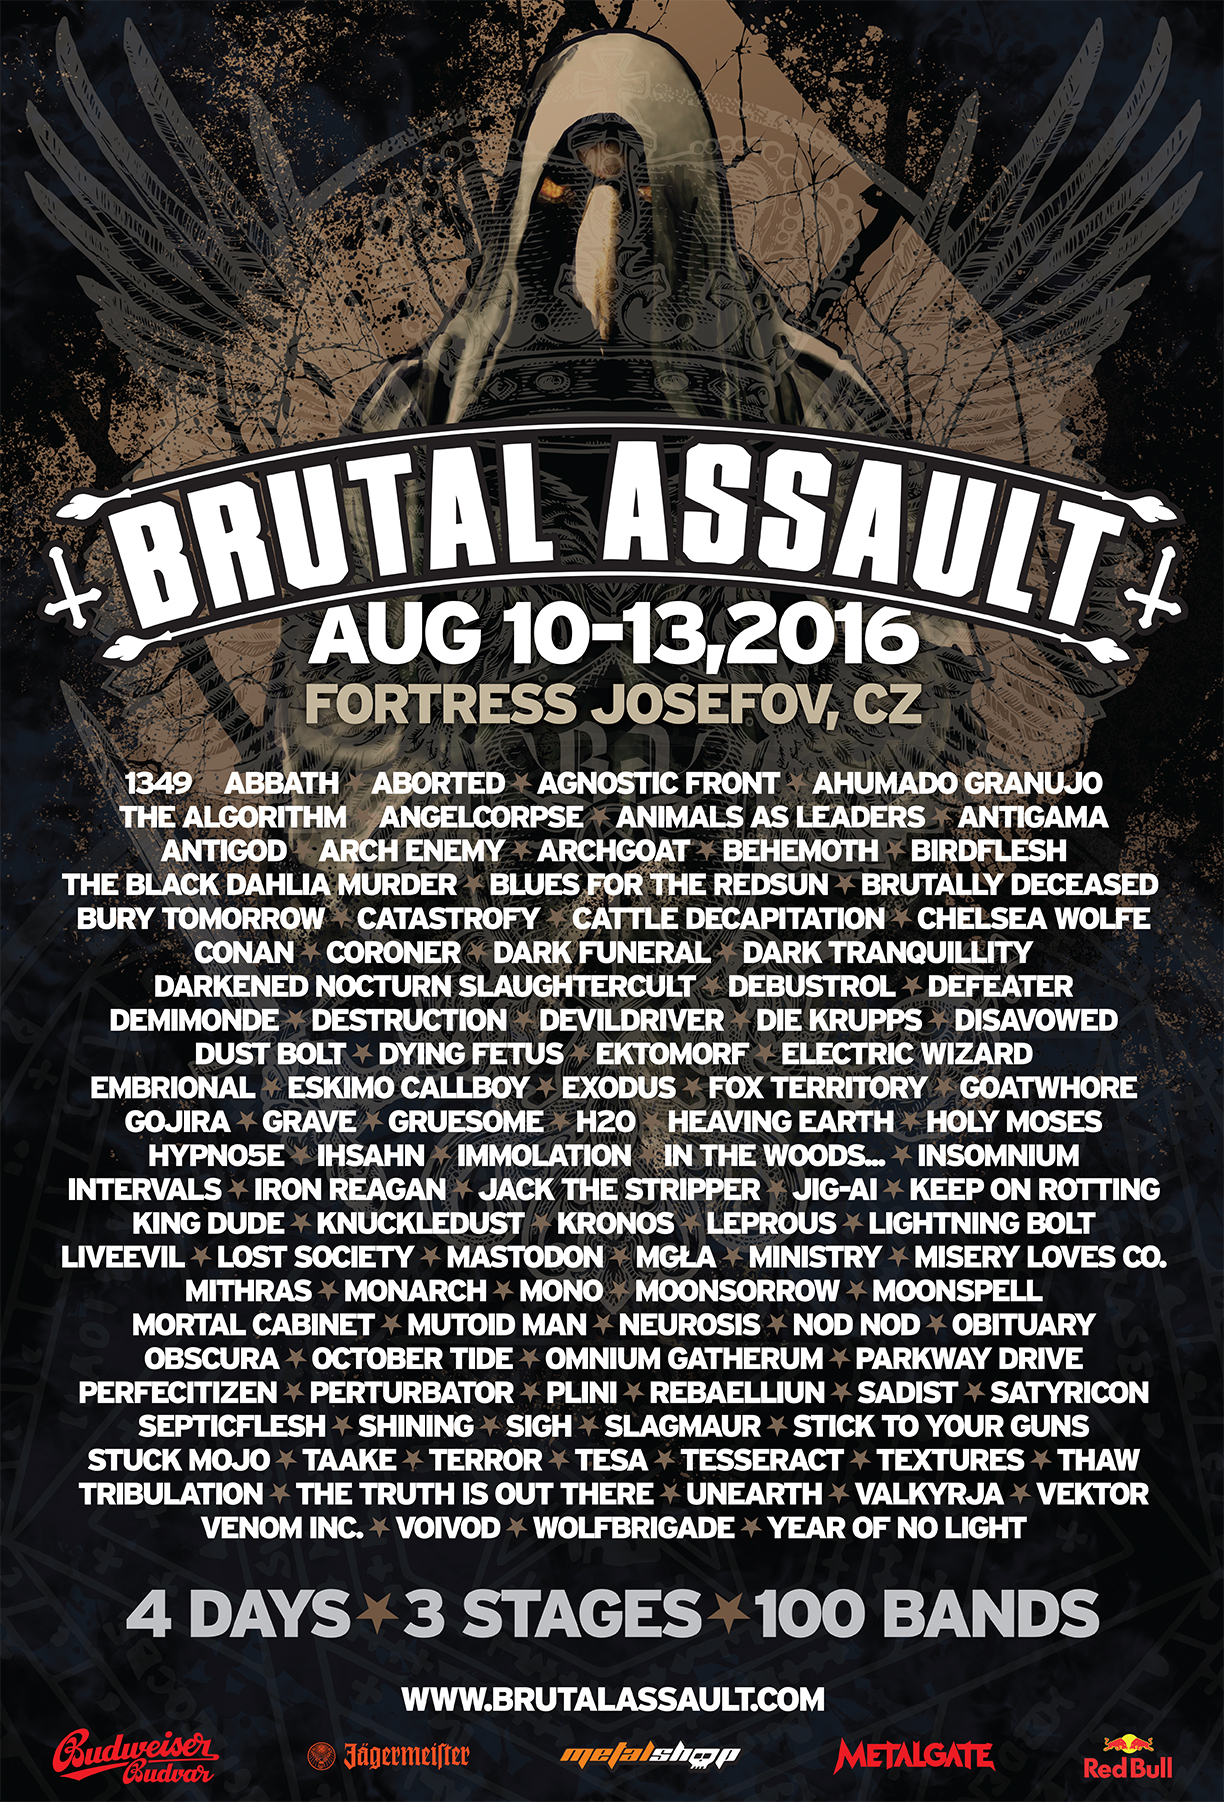 Brutal Assault Festival